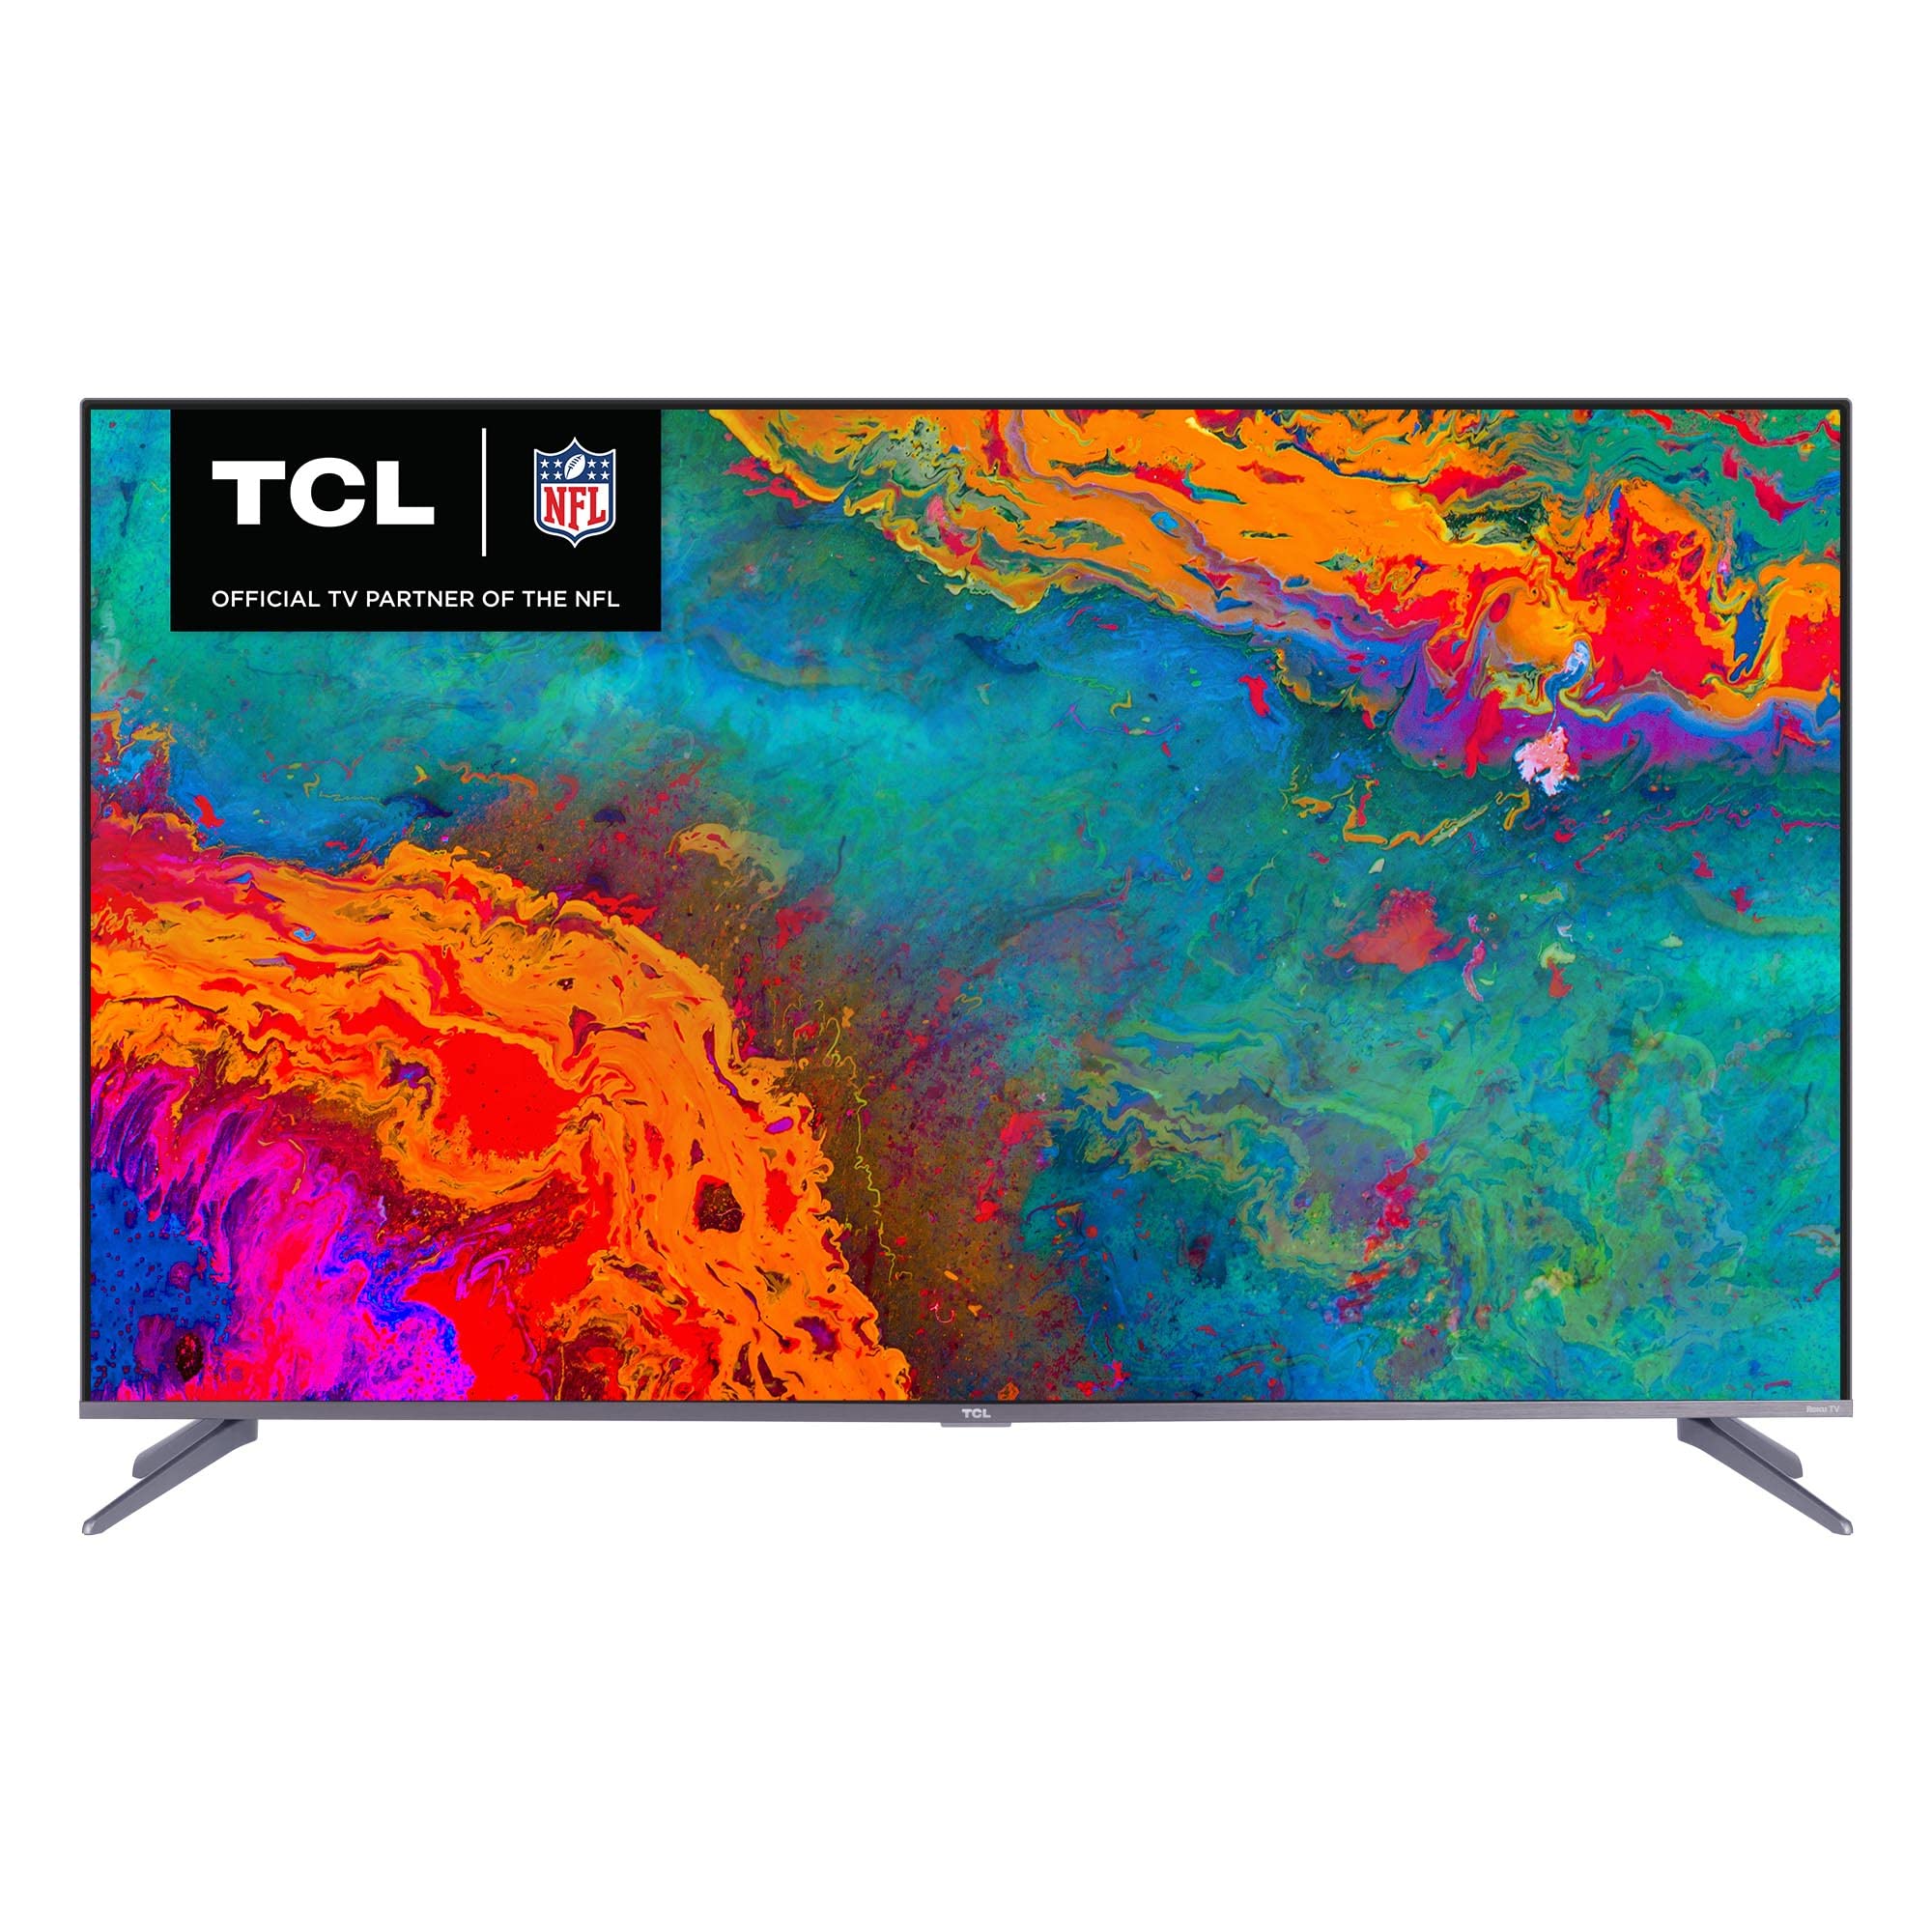 TCL 65-inch 5-Series 4K UHD Dolby Vision HDR QLED Roku Smart TV - 65S535, 2021 Model,Black